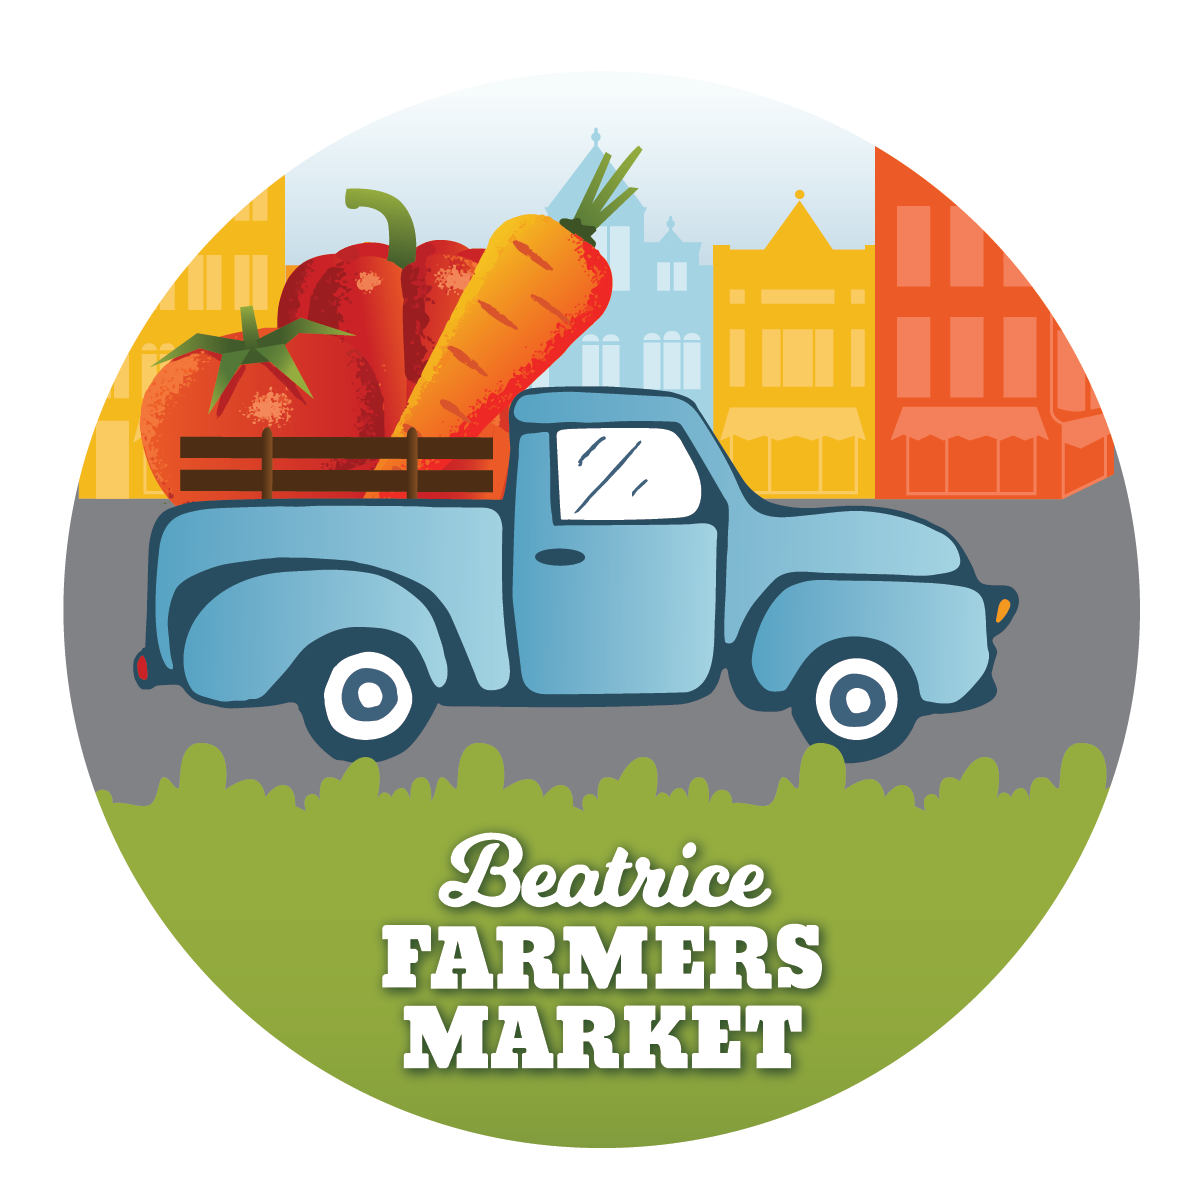 Beatrice Farmers' Market Logo